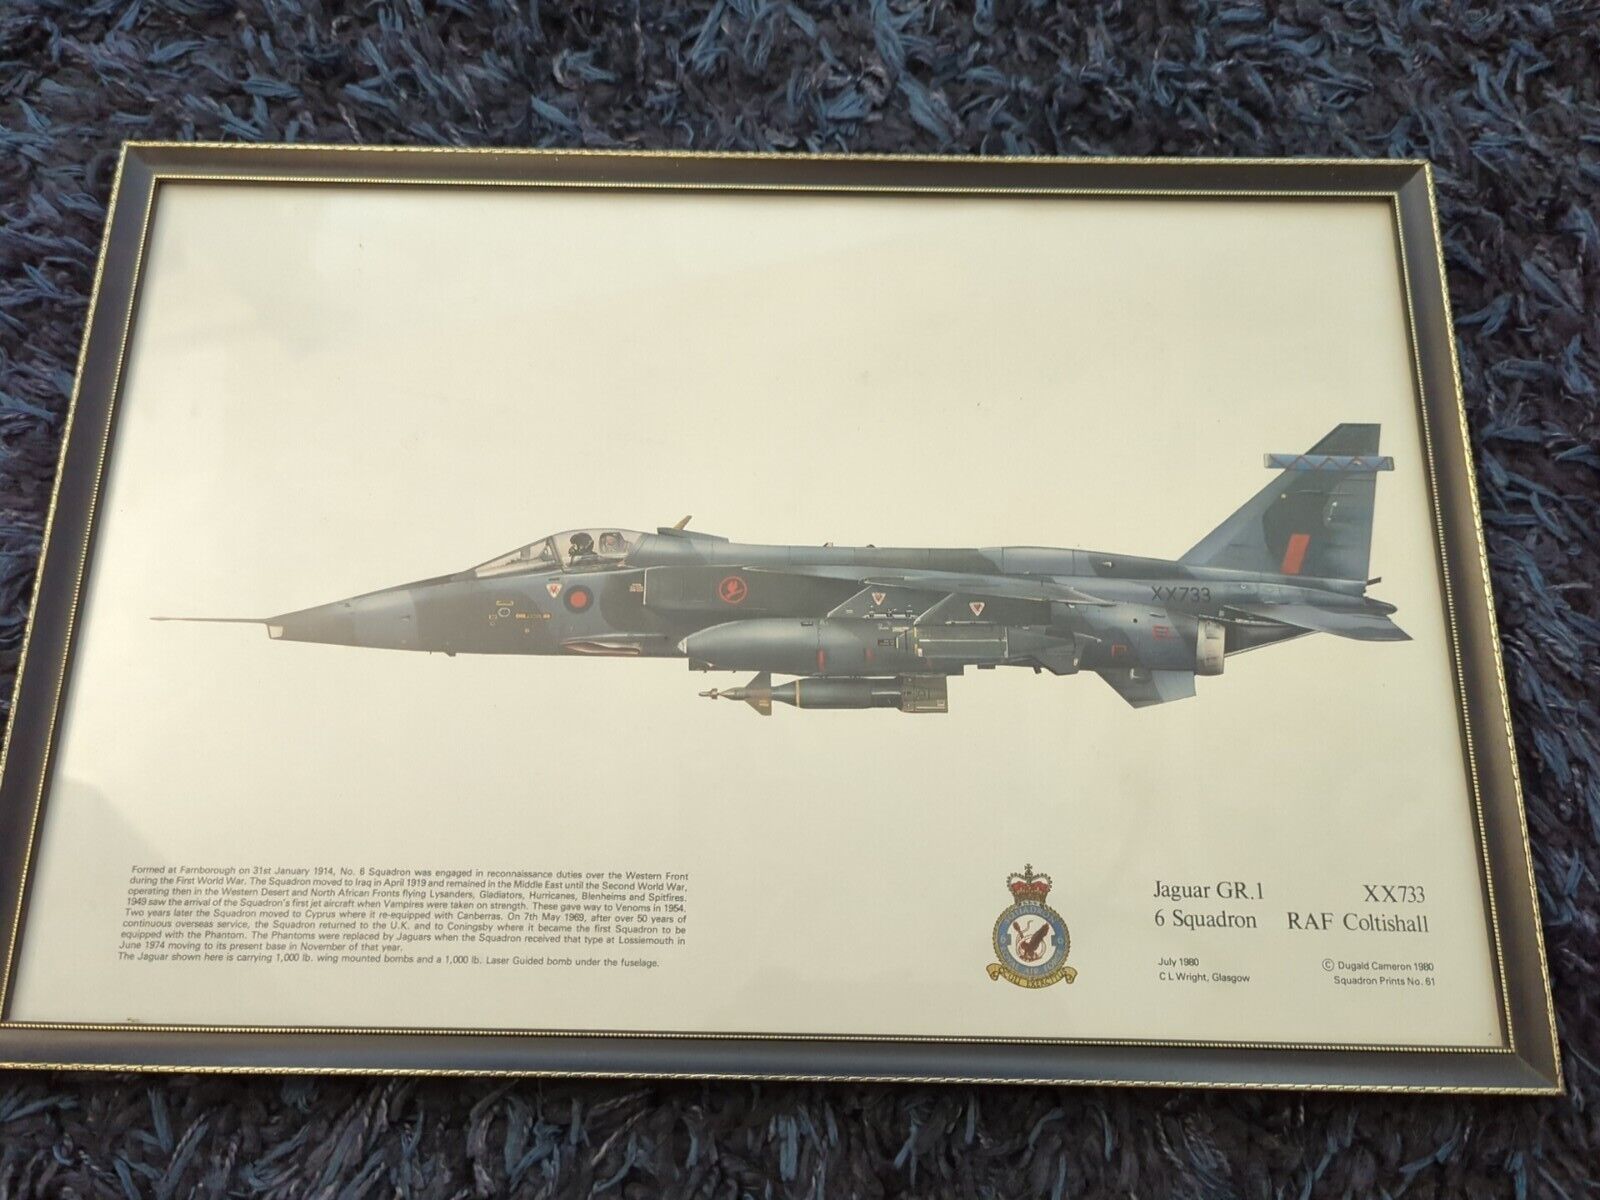 Dugald Cameron Squadron Print (61) 1980 Jaguar GR1, 6 Squadron,RAF Coltishall